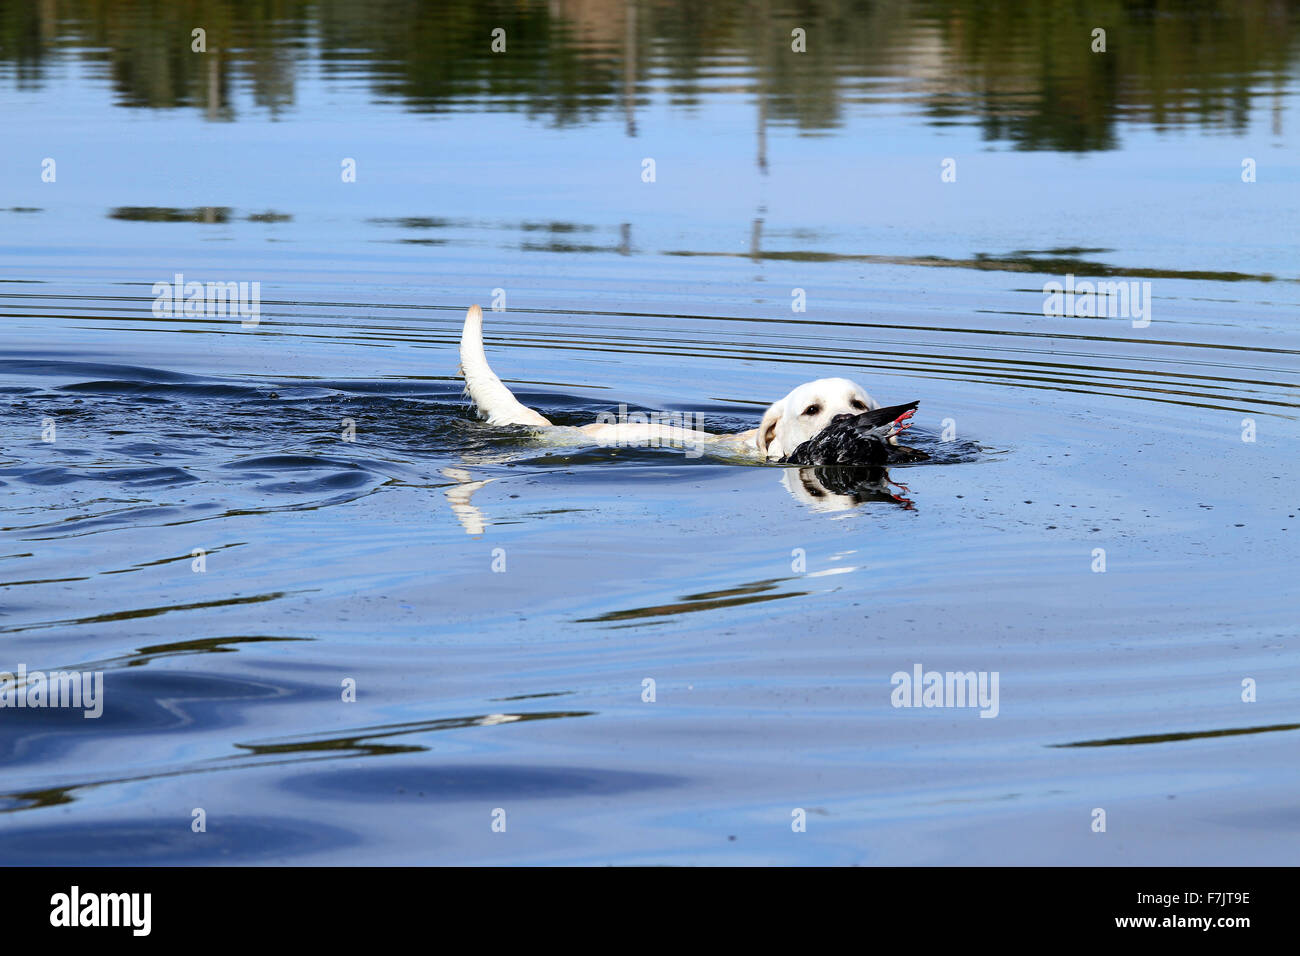 young yellow Labrador retriever retrieving a duck in the pond Stock Photo